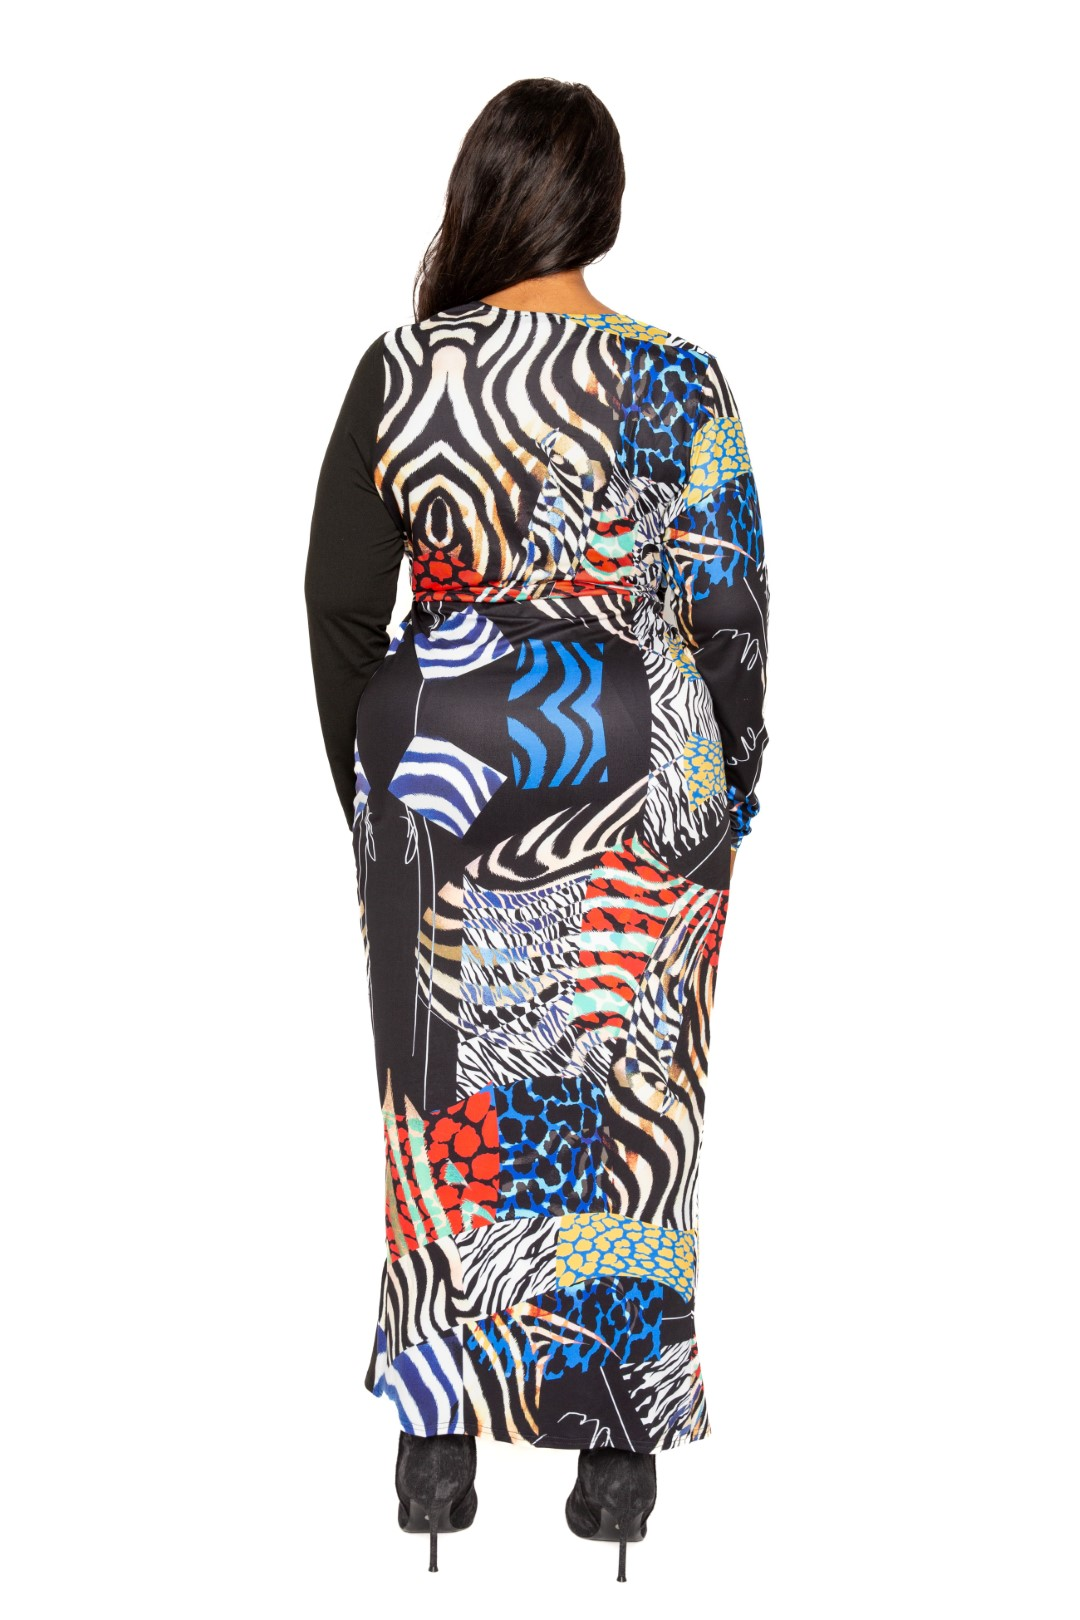 Animal Print Splice Dress With High-low Hem - Tigbuls Variety Fashion